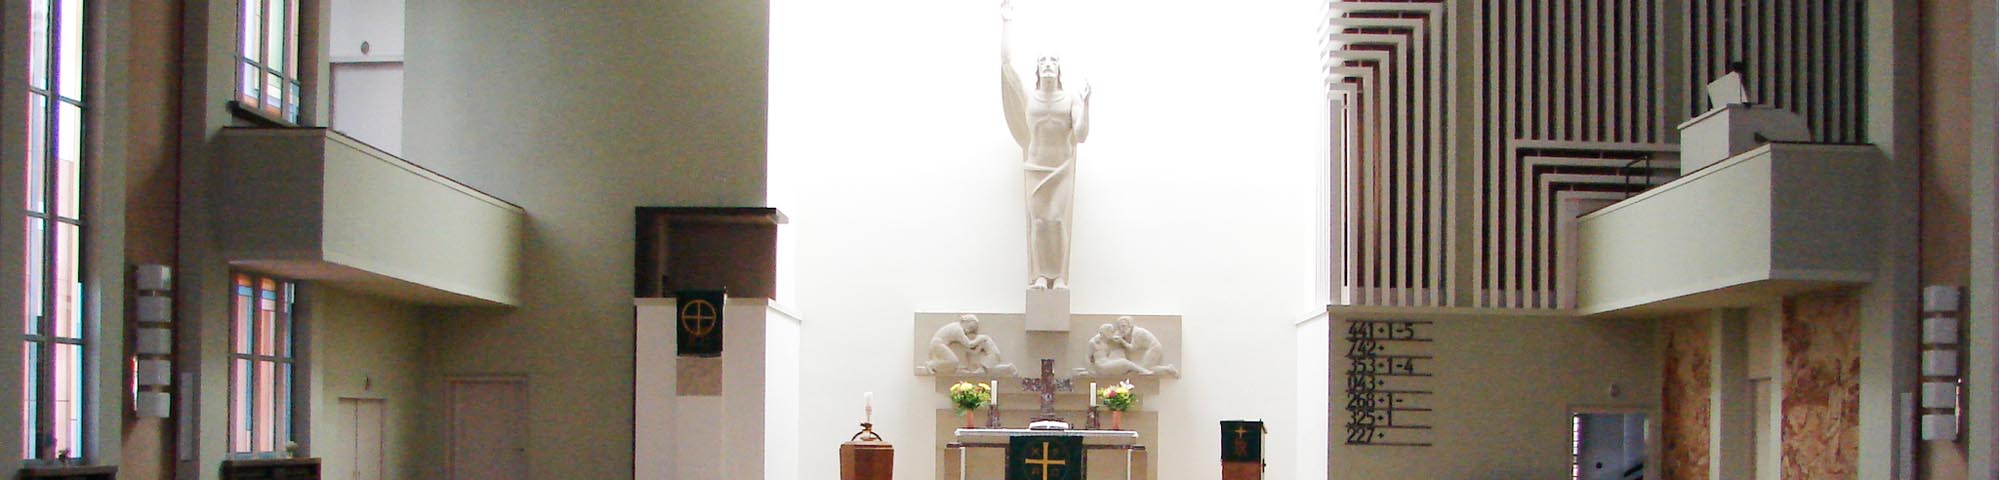 Altar der Versöhnungskirche Leipzig-Gohlis